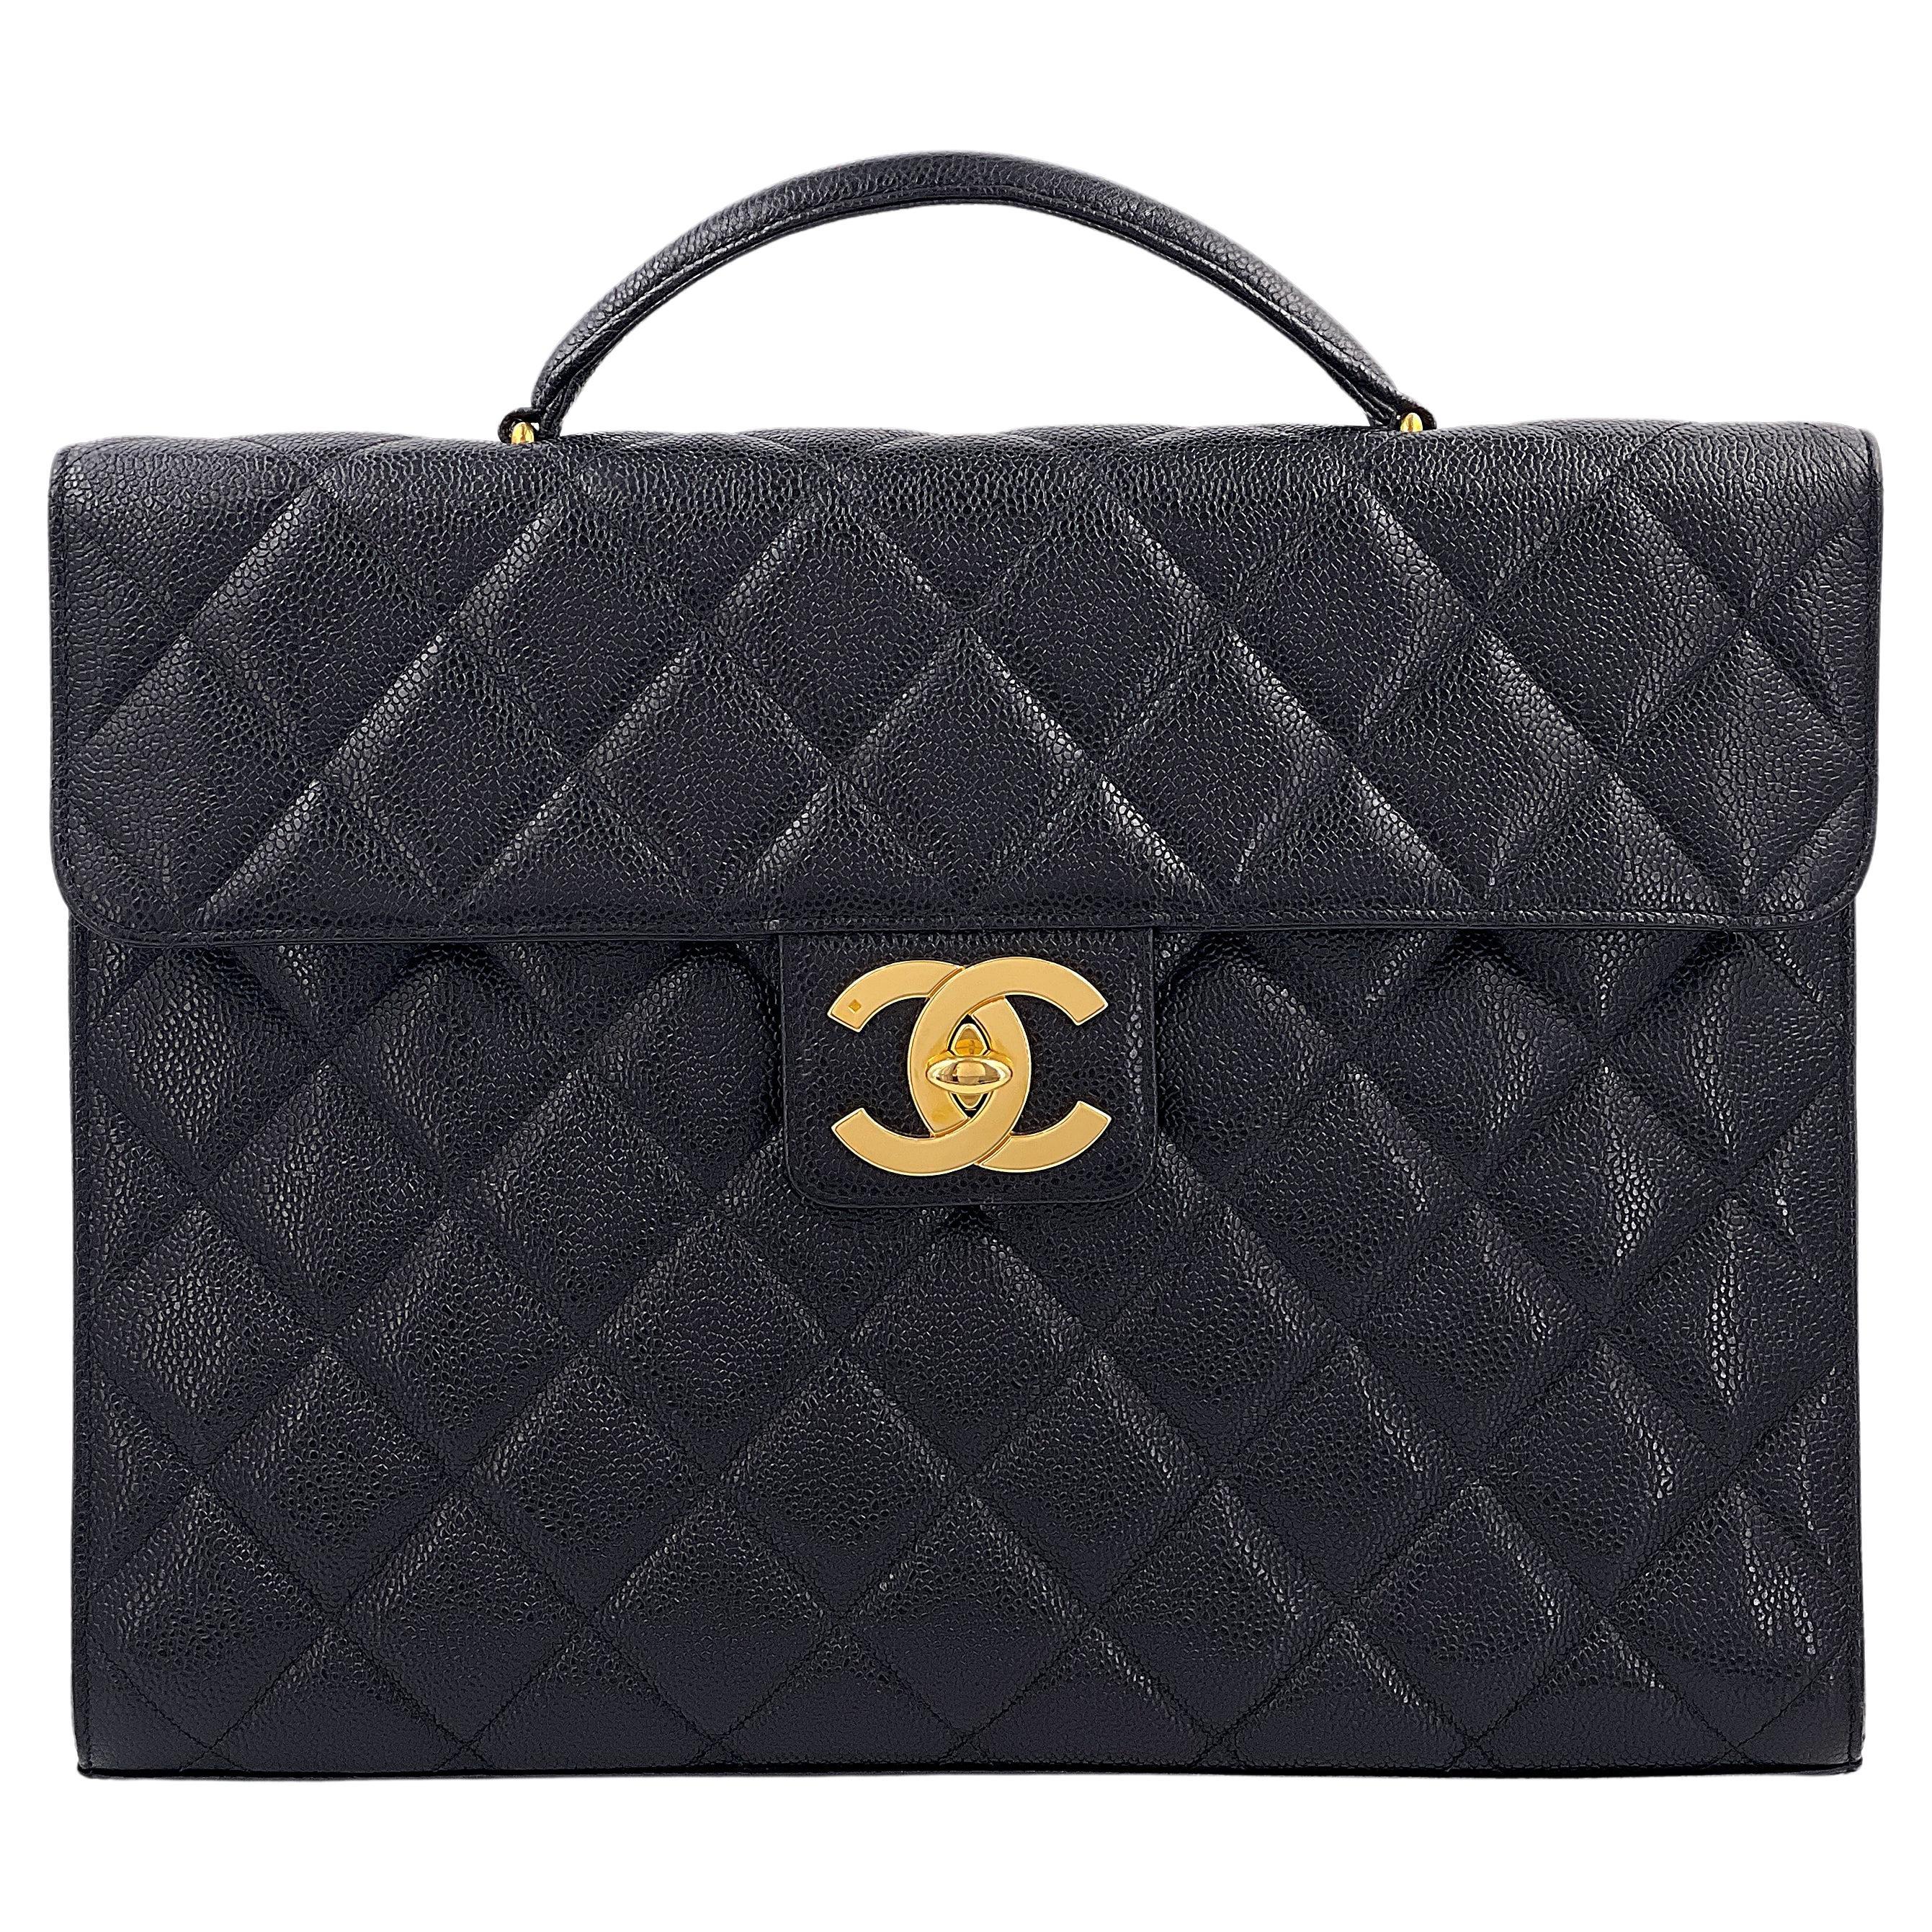 Chanel 1995 Vintage Black Caviar Briefcase Tote Bag 24k GHW 67916 For Sale